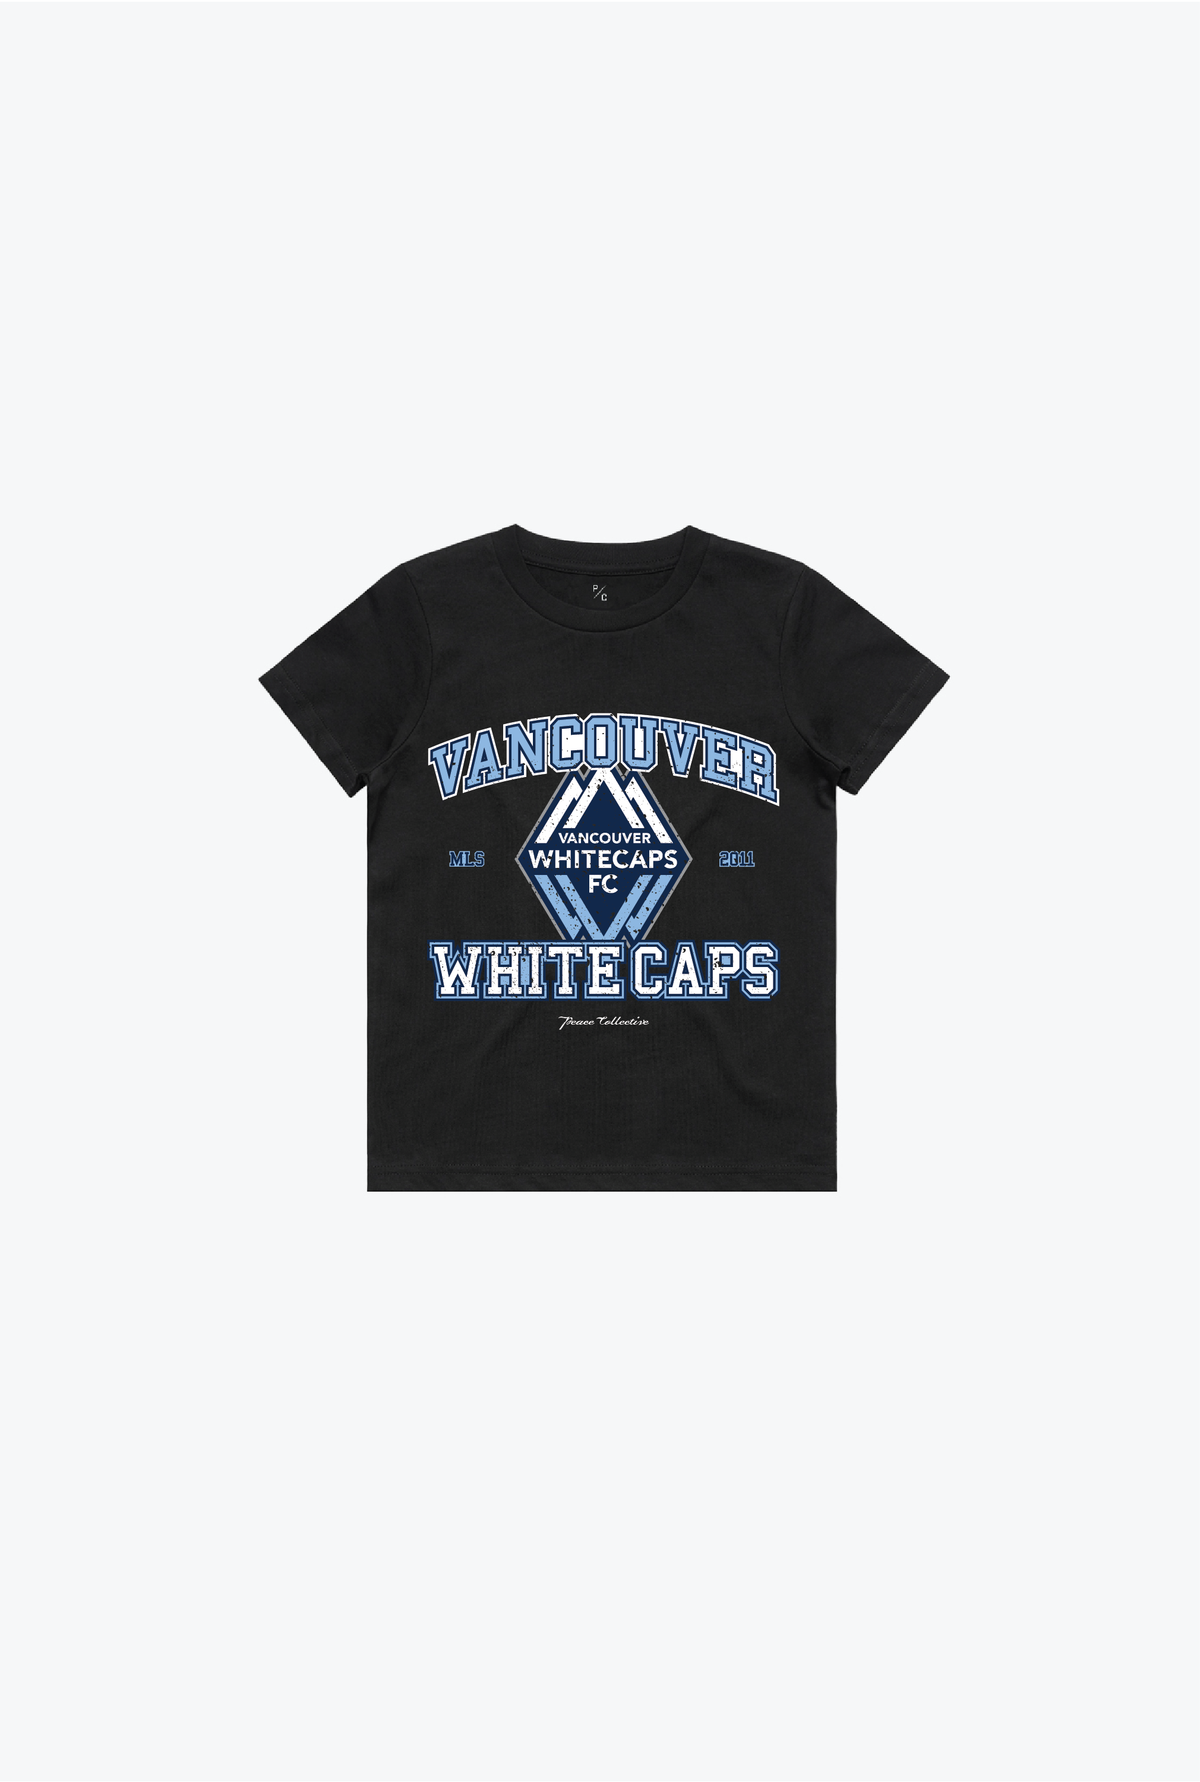 Vancouver Whitecaps FC Vintage Washed Kids T-Shirt - Black